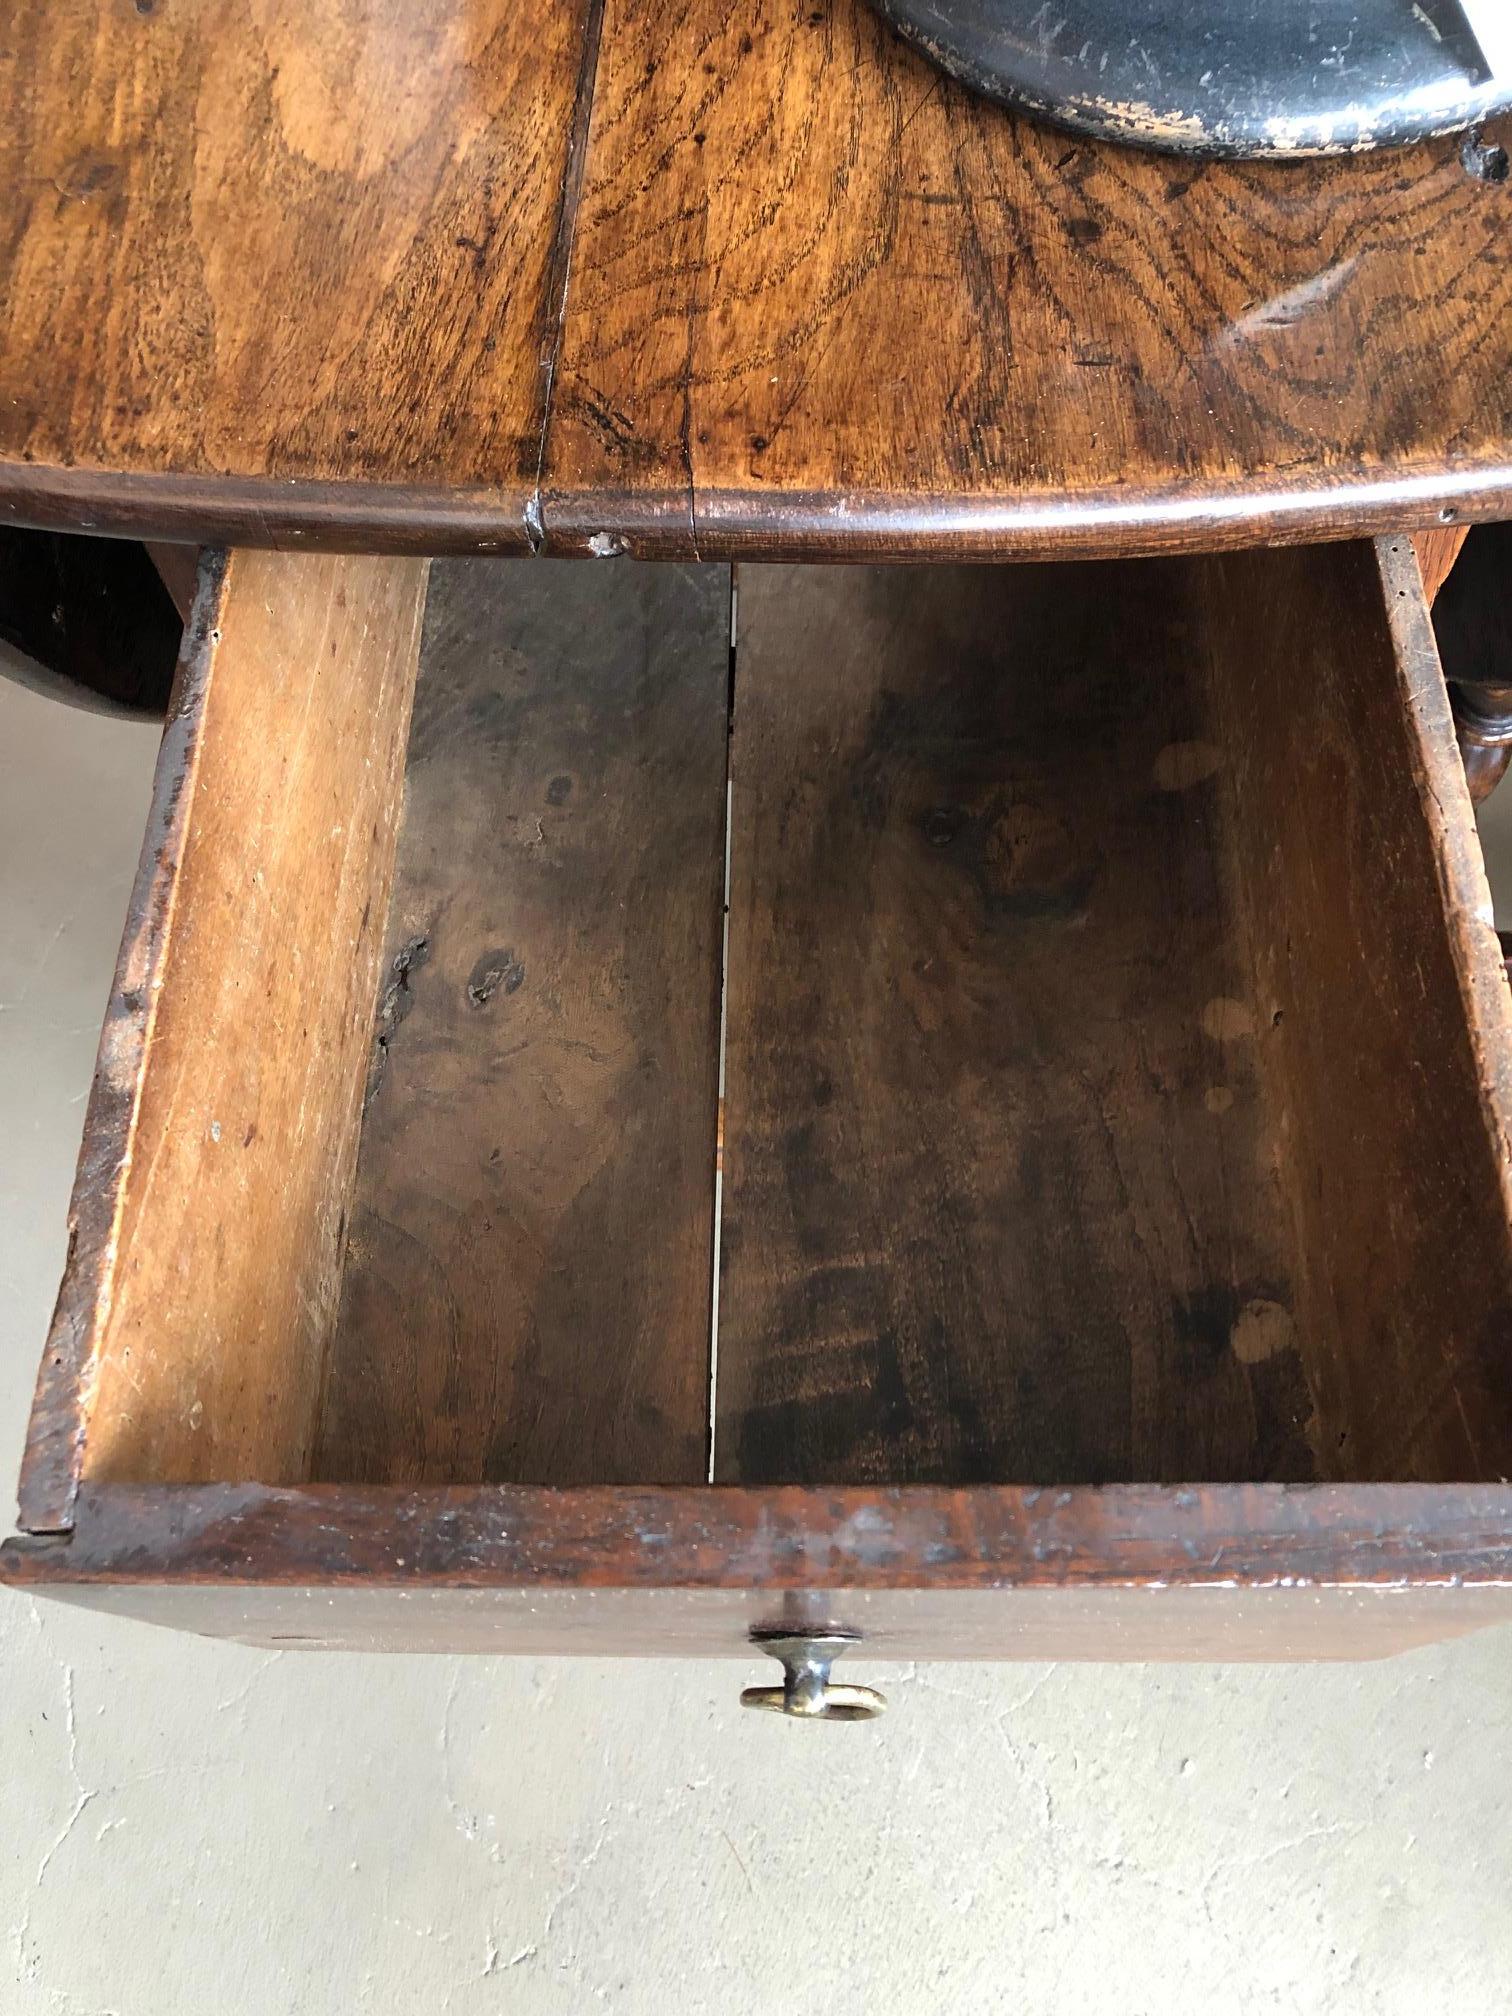 18th Century and Earlier 18th Century English Oak Gateleg Table